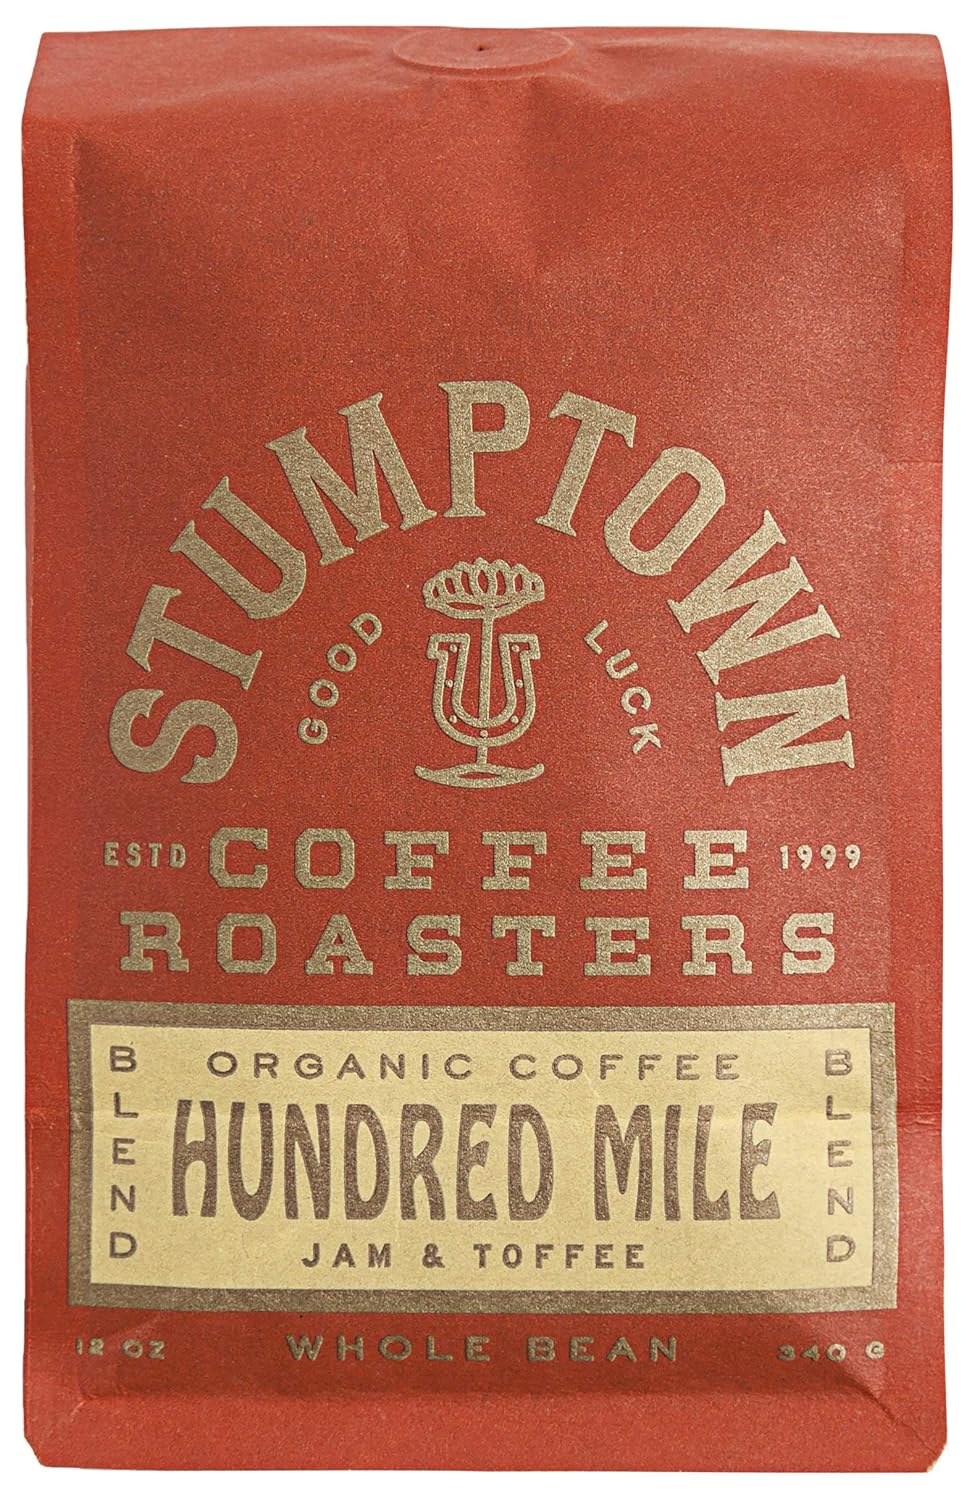 Stumptown Coffee Roasters, Medium Roast Whole Bean Coffee - Homestead Blend 12 Ounce Bag with Flavor Notes of Milk Chocolate, Cherry and Orange